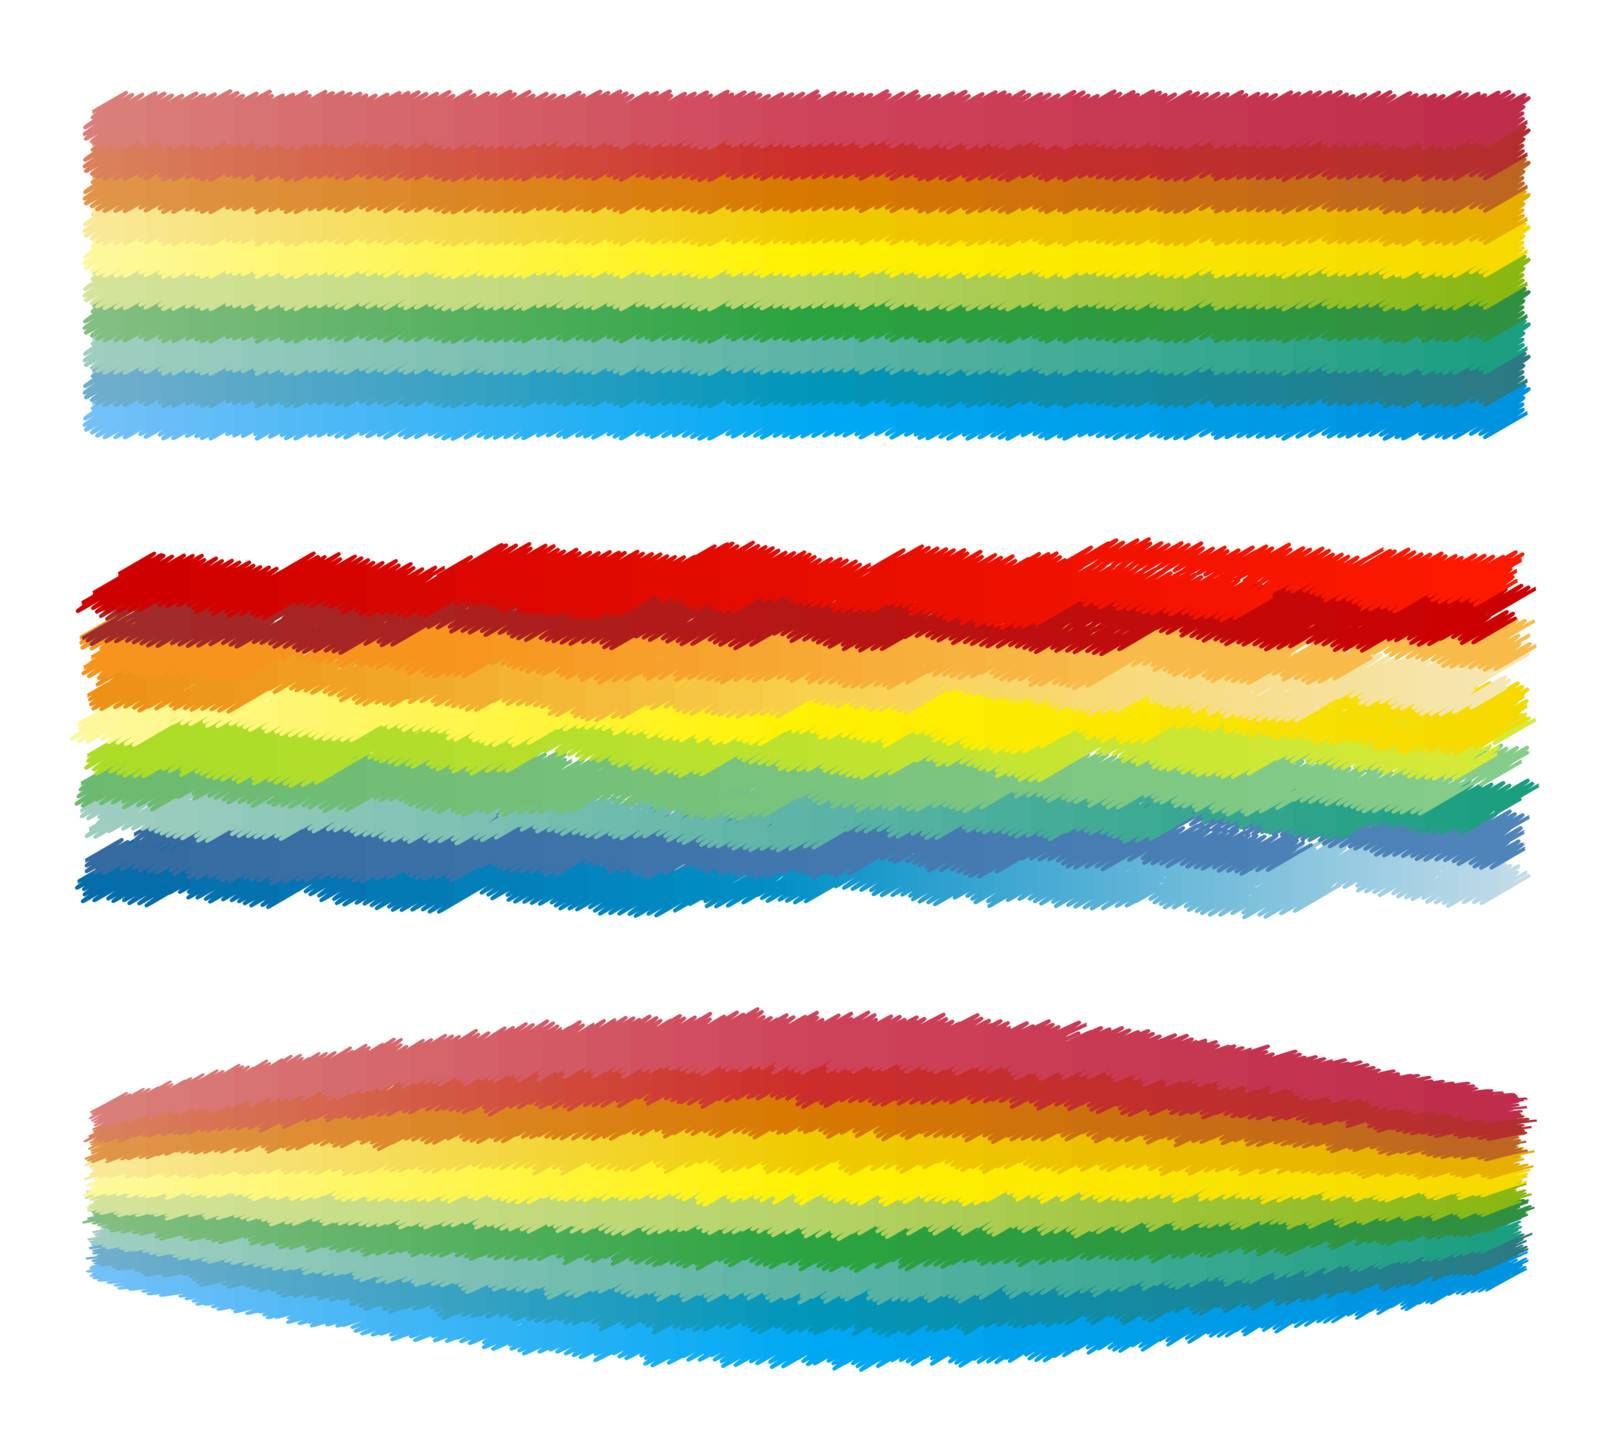 Rainbow crayon scribble stripes by domencolja